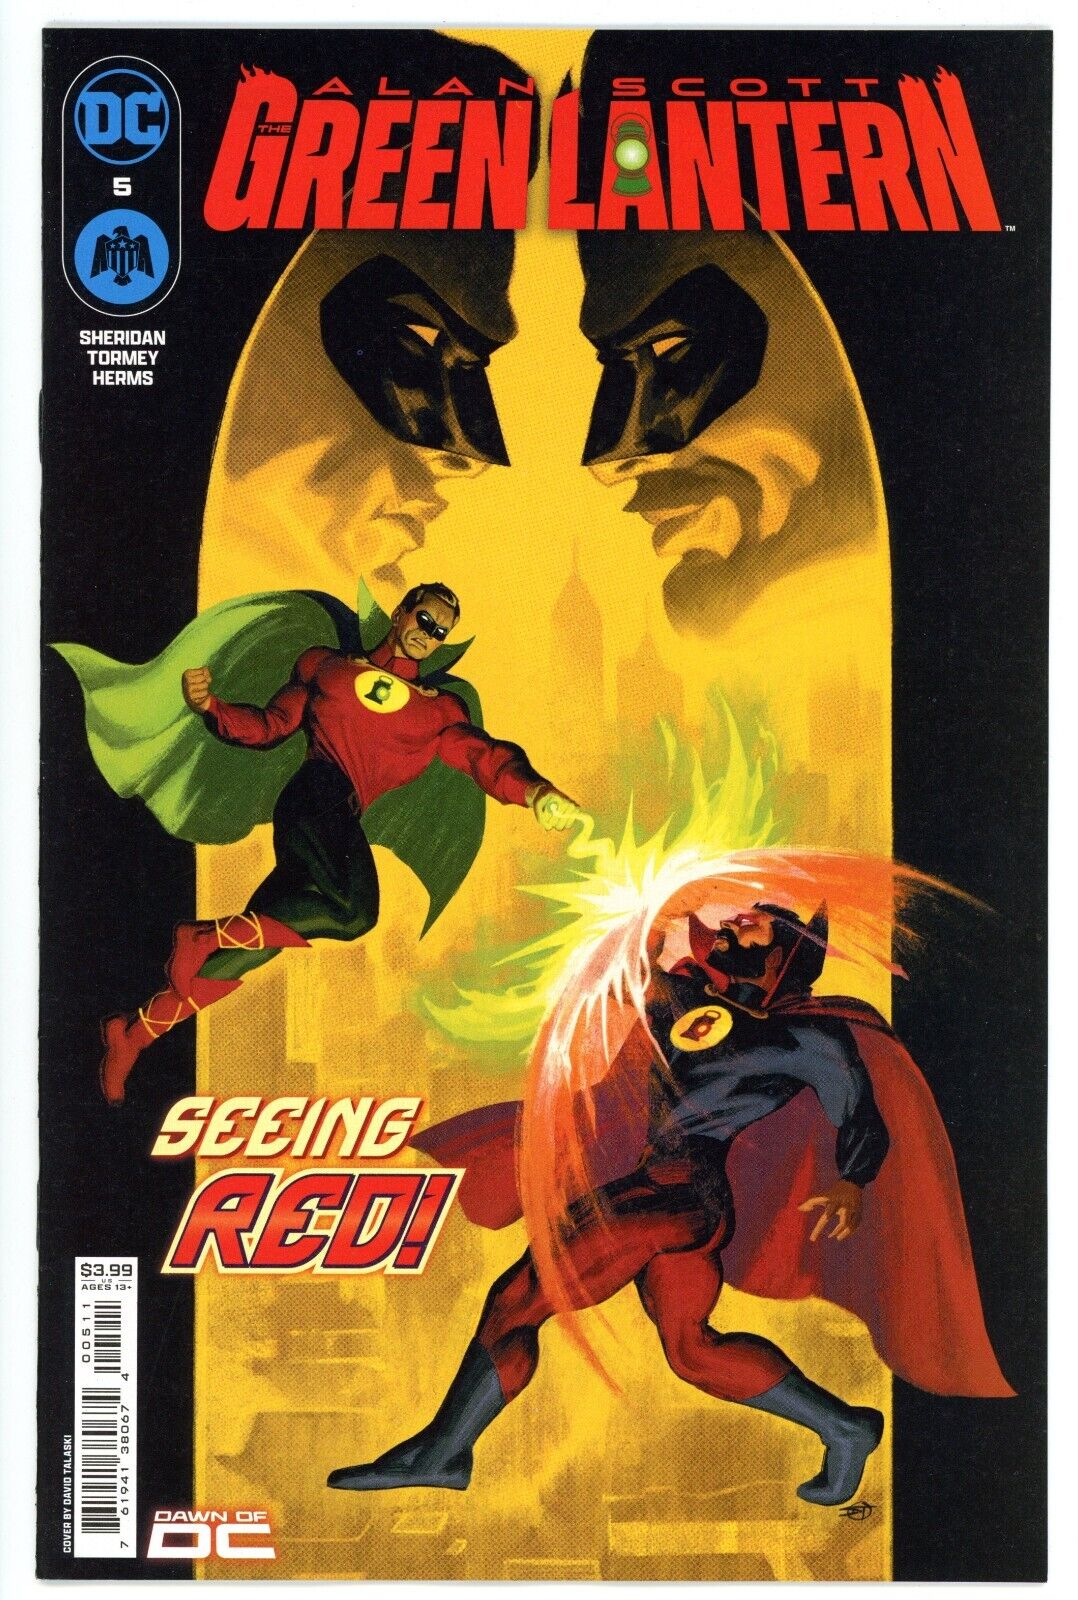 Alan Scott The Green Lantern #5   |  Cover A   |   NM   NEW